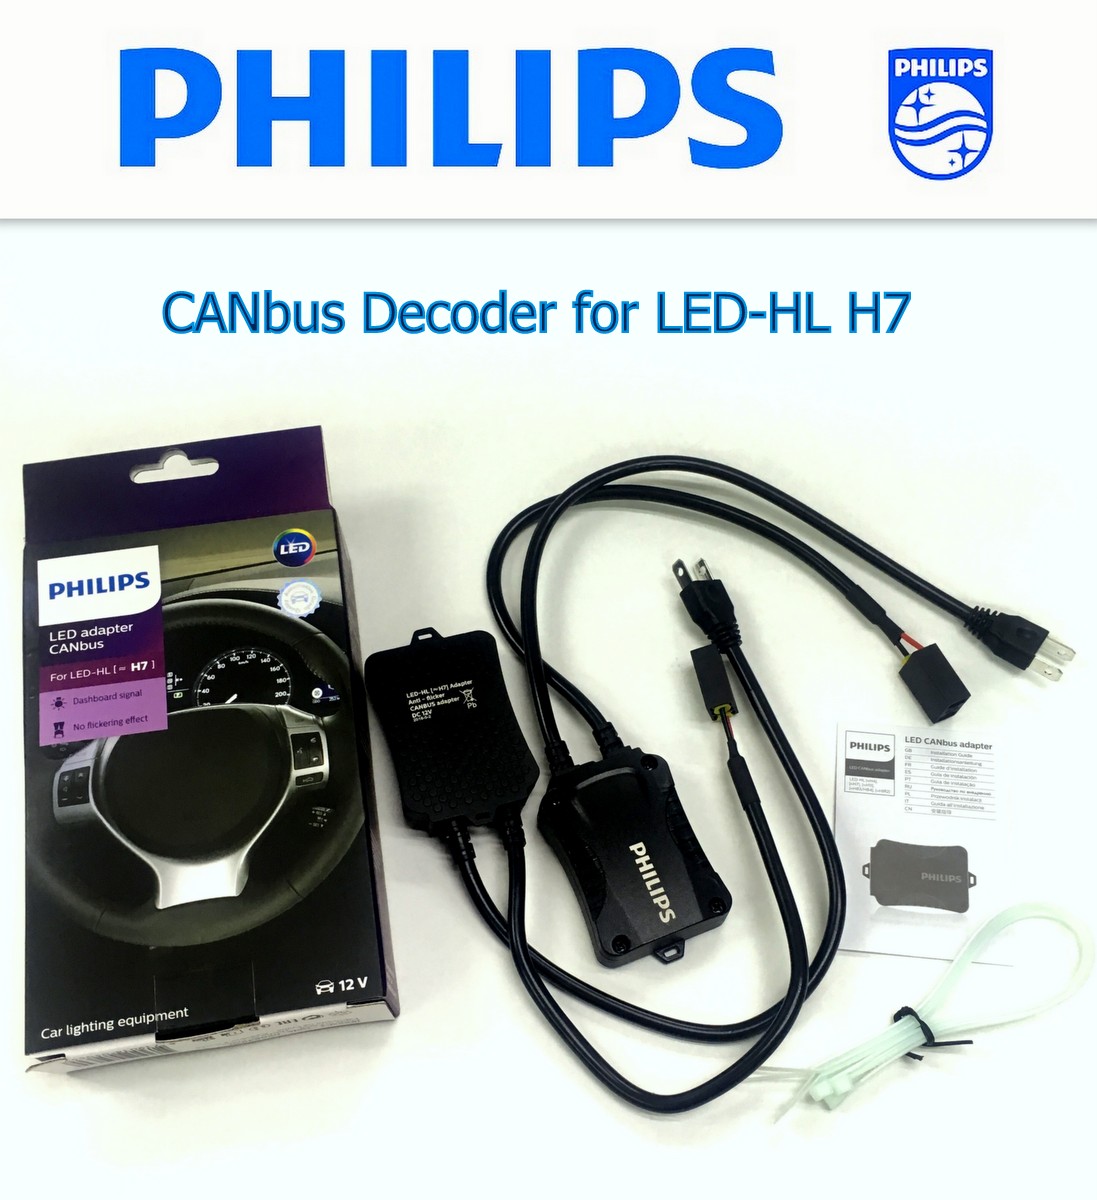 飛利蒲 H7 LED Adapter CANbus 12V 汽車解碼器Error訊號消除器